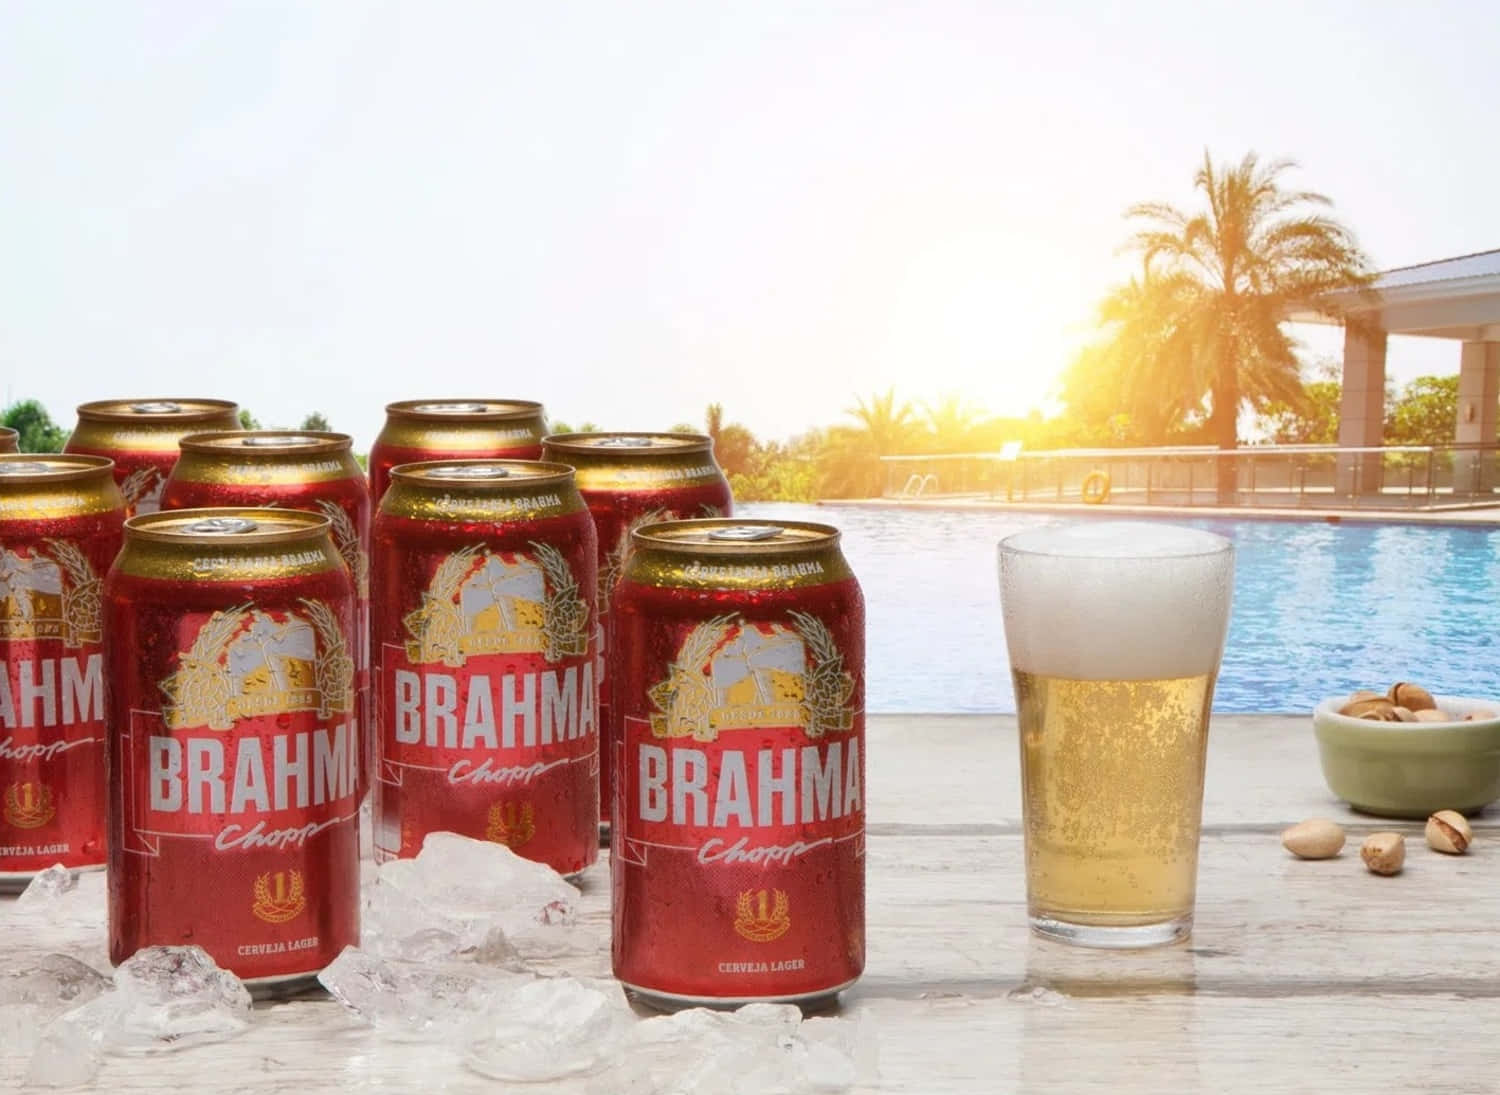 Brazilian Brahma Chopp Beer Cans At Poolside Wallpaper